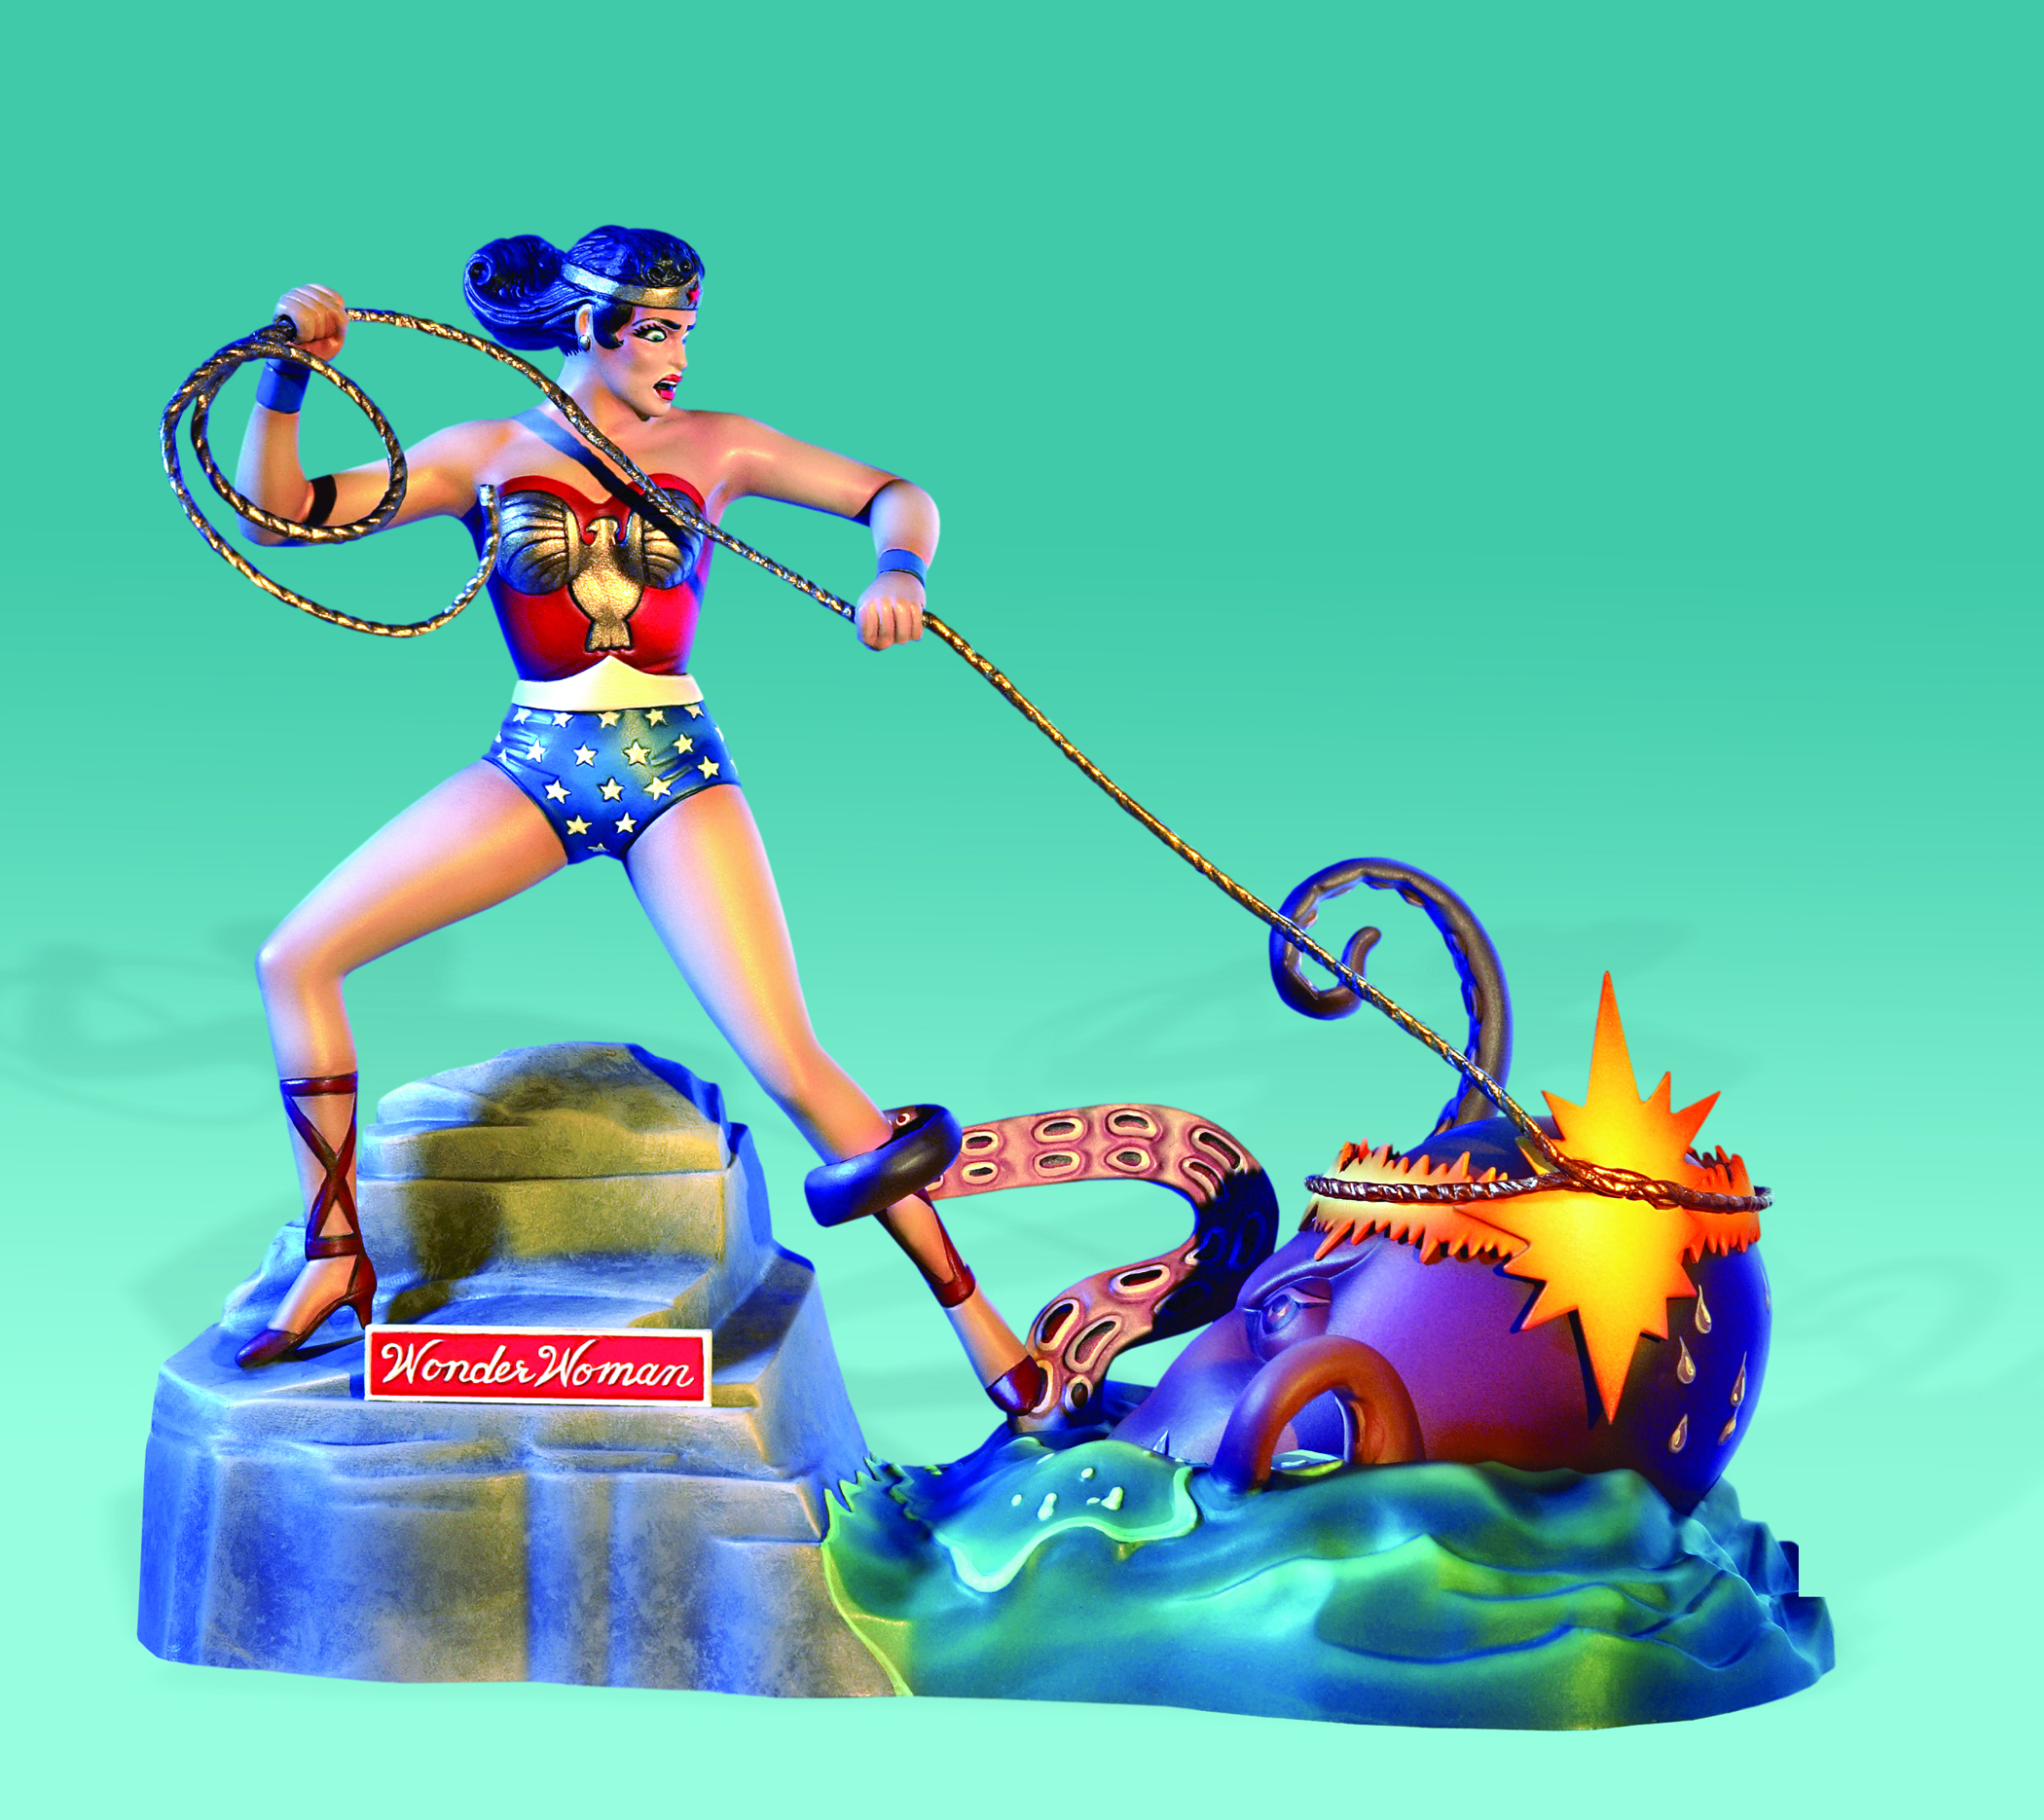 Moebius Model 1/8 TV Wonder Woman Model Kit [MOE973] - HobbyTown